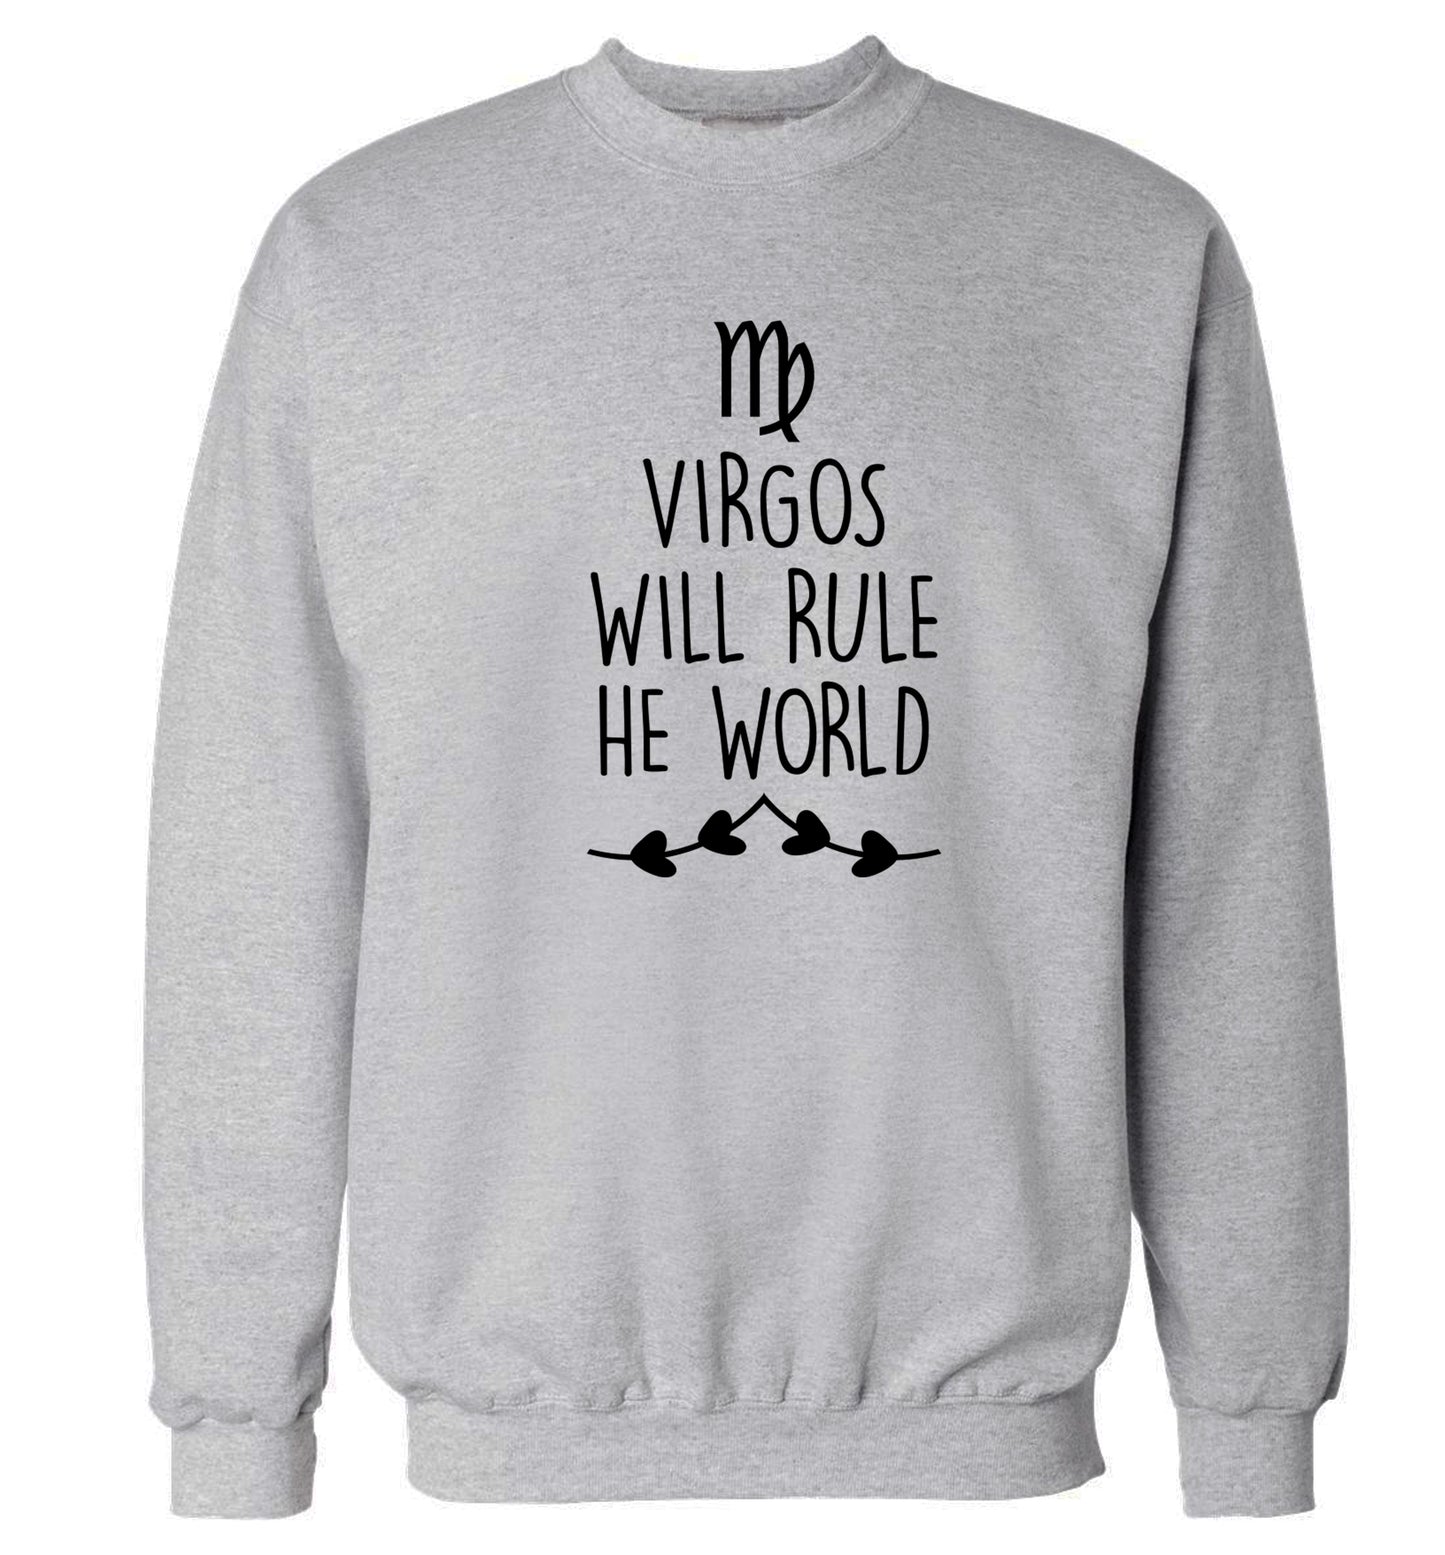 Virgos will rule the world Adult's unisex grey Sweater 2XL